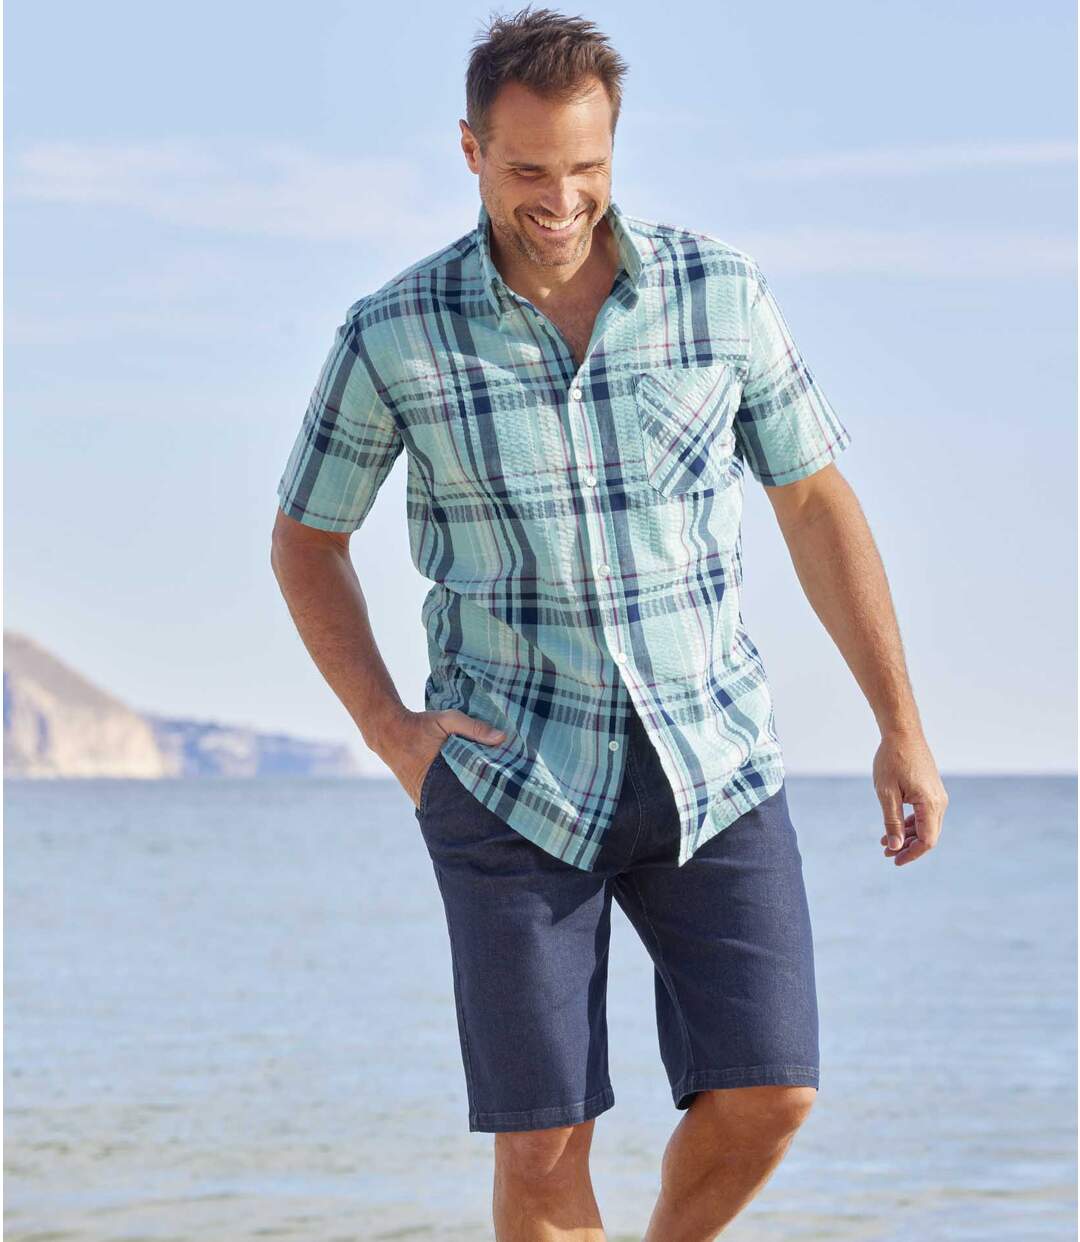 Men's Stretchy Denim Shorts - Blue Atlas For Men